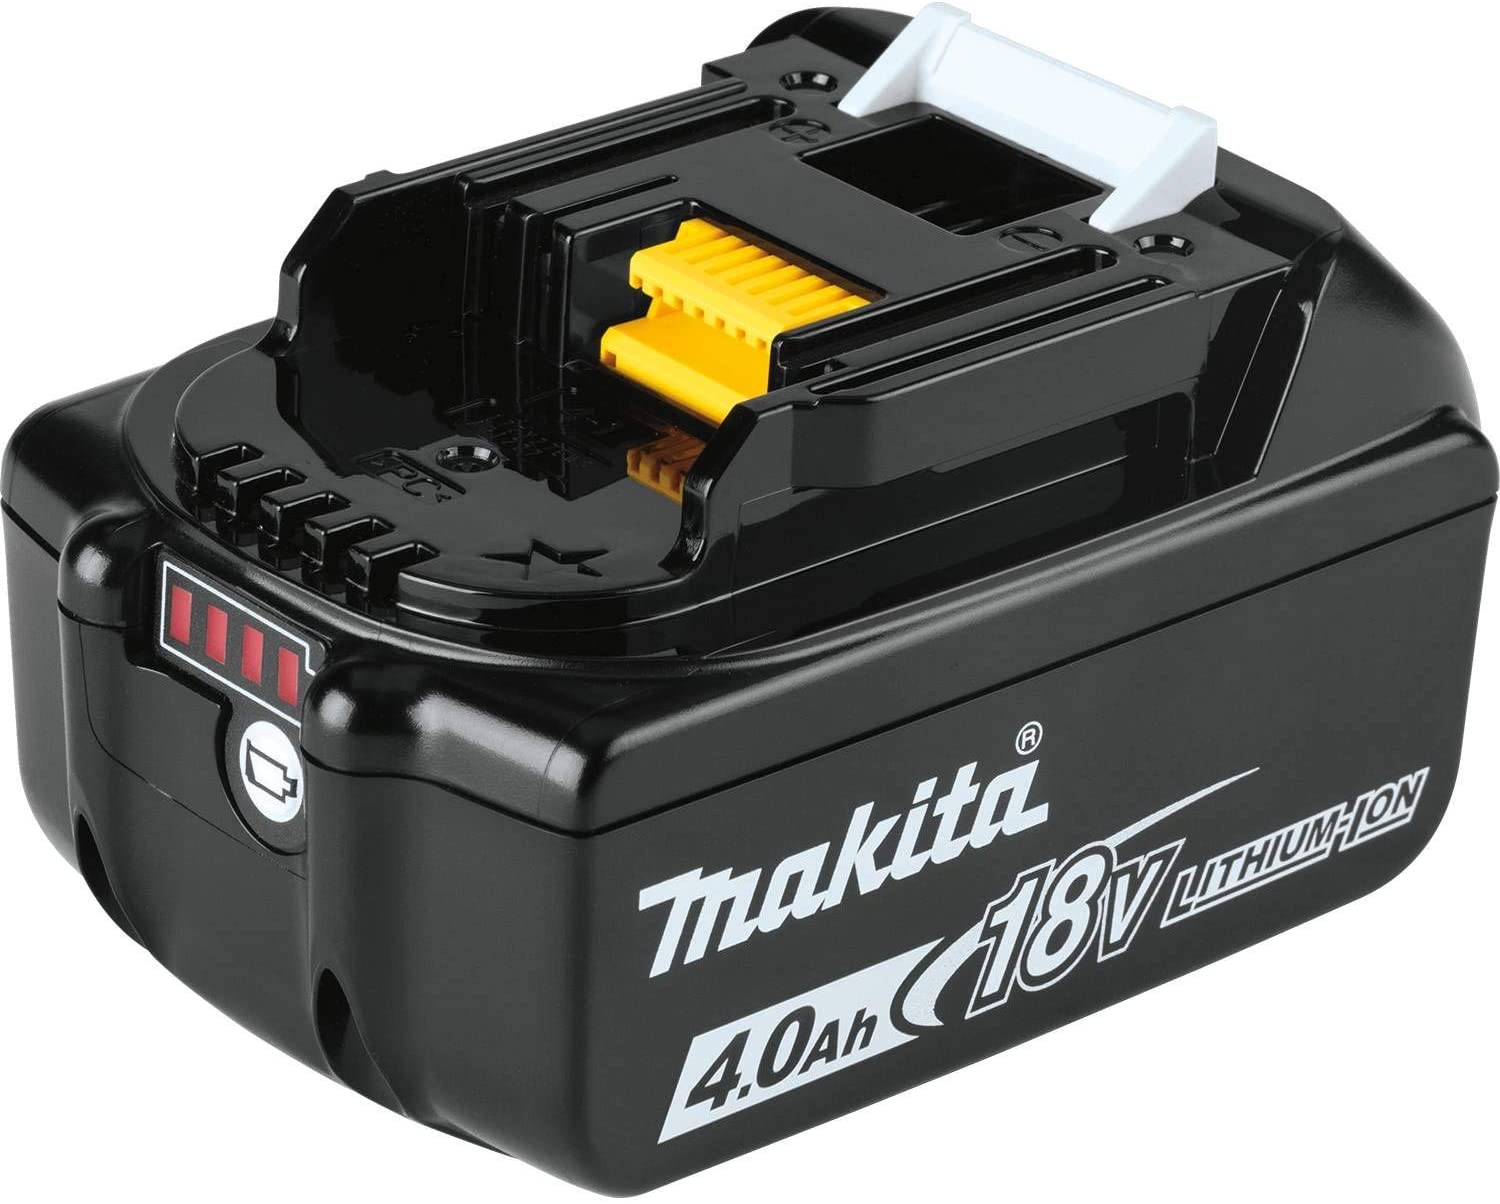 Makita 18.0V LXT Lithium-ion Battery, 5.0Ah Capacity